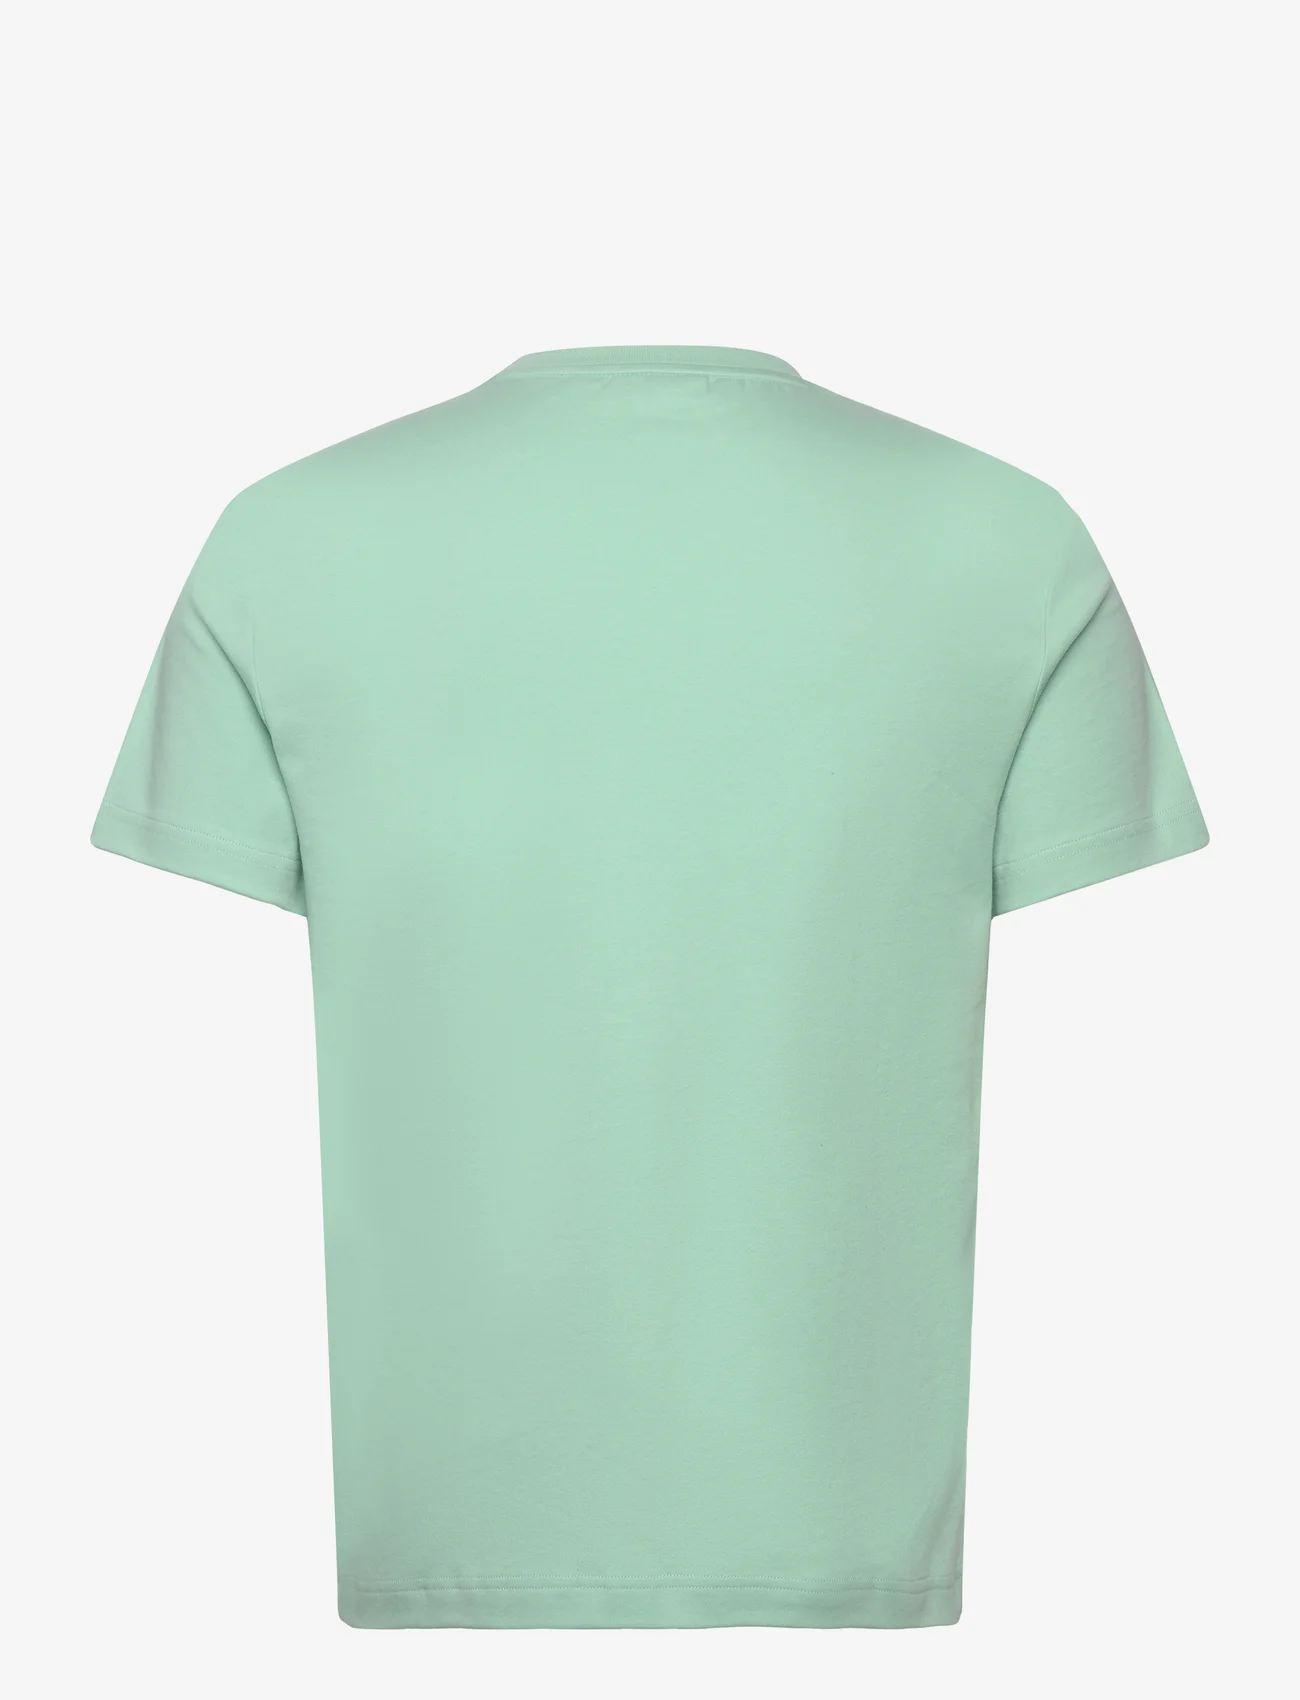 Calvin Klein - MICRO LOGO INTERLOCK T-SHIRT - short-sleeved t-shirts - lichen - 1